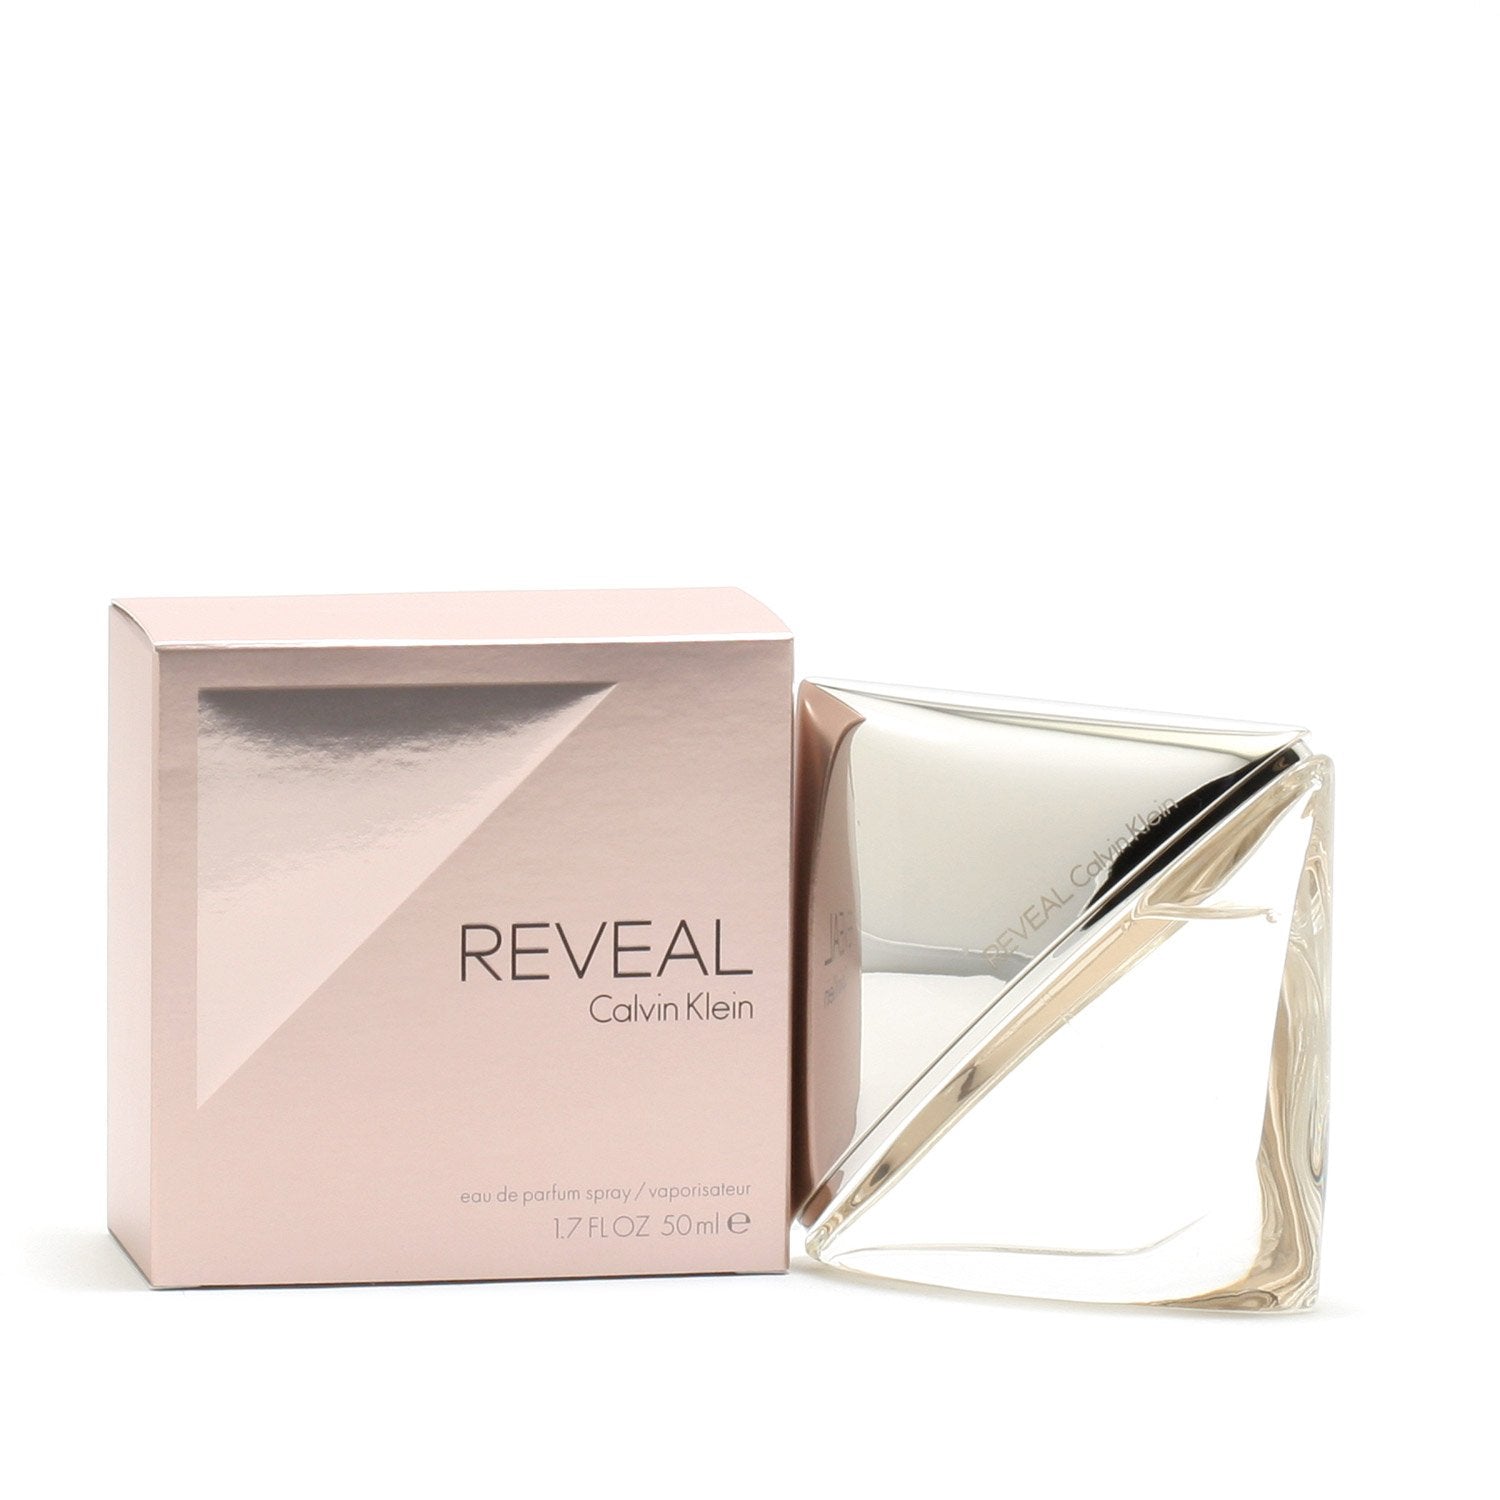 PARFUM WOMEN - KLEIN REVEAL BY FOR Fragrance – DE CALVIN SPRAY Room EAU